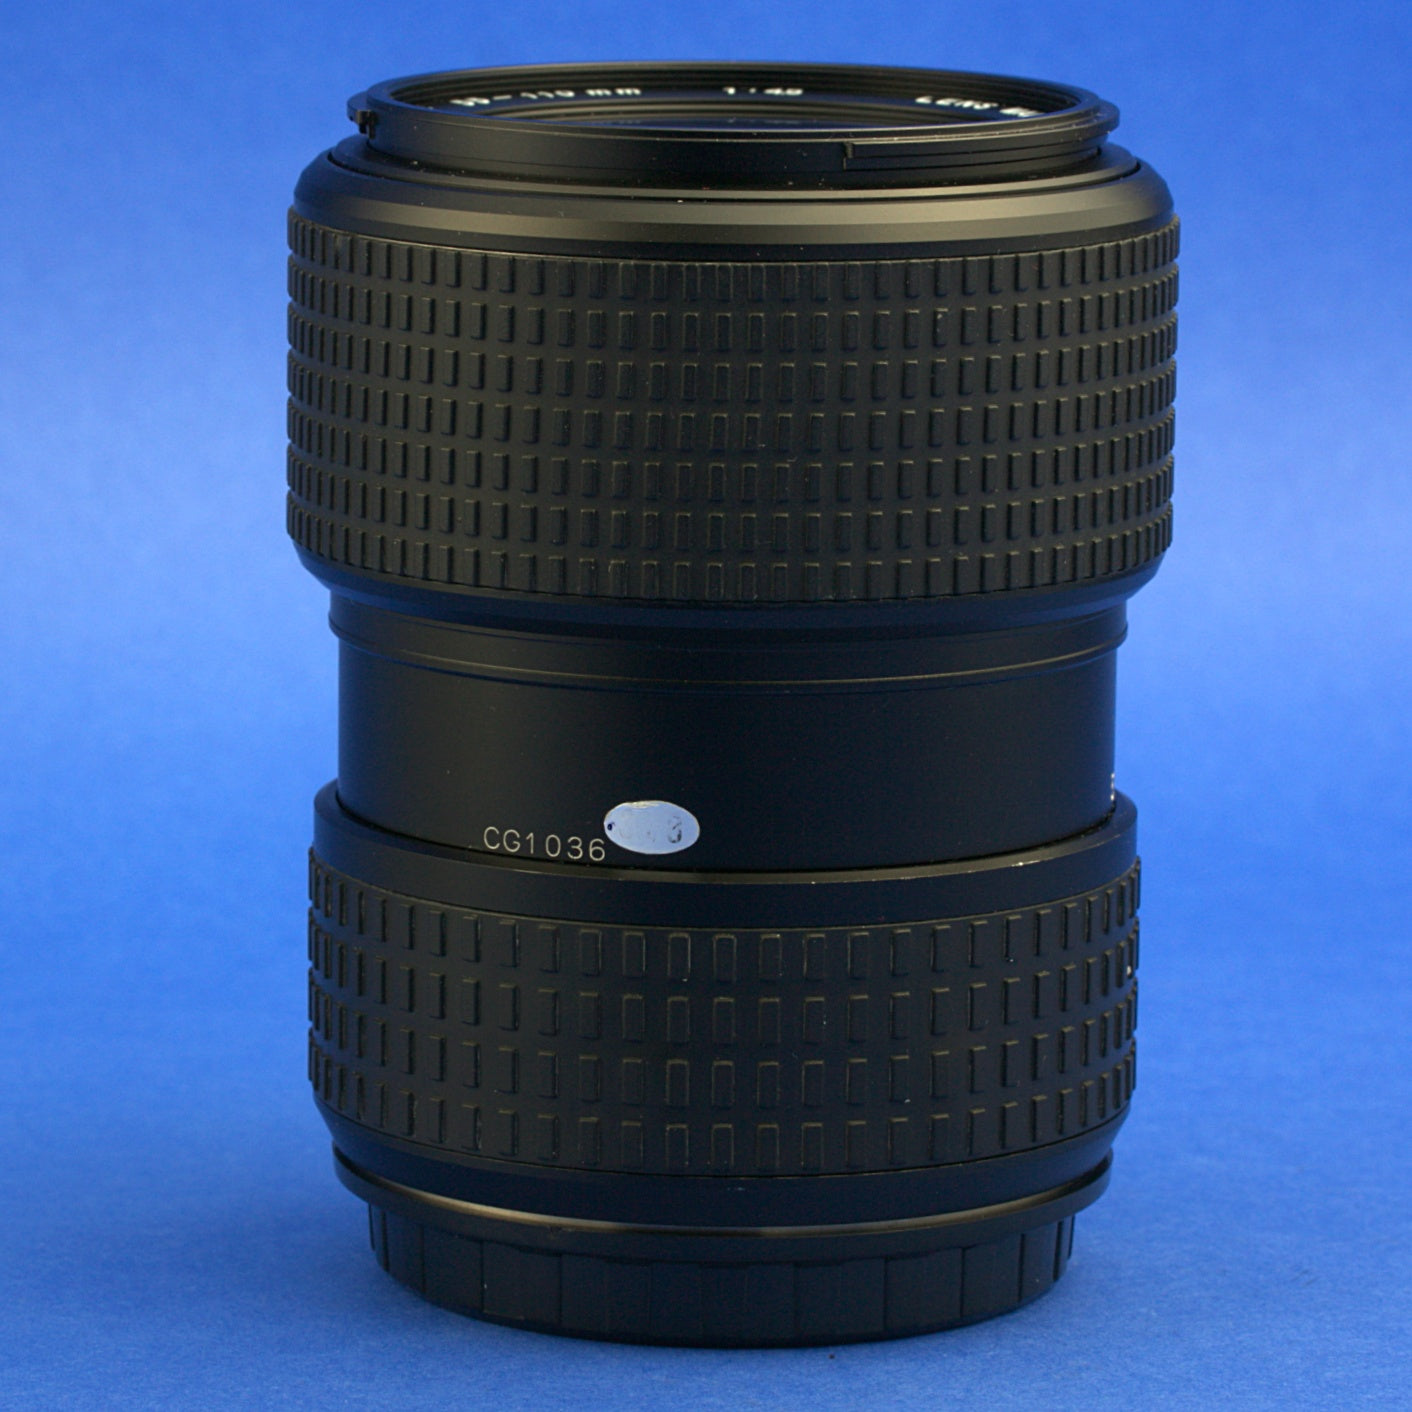 Mamiya 645 AF 55-110mm 4.5 Lens